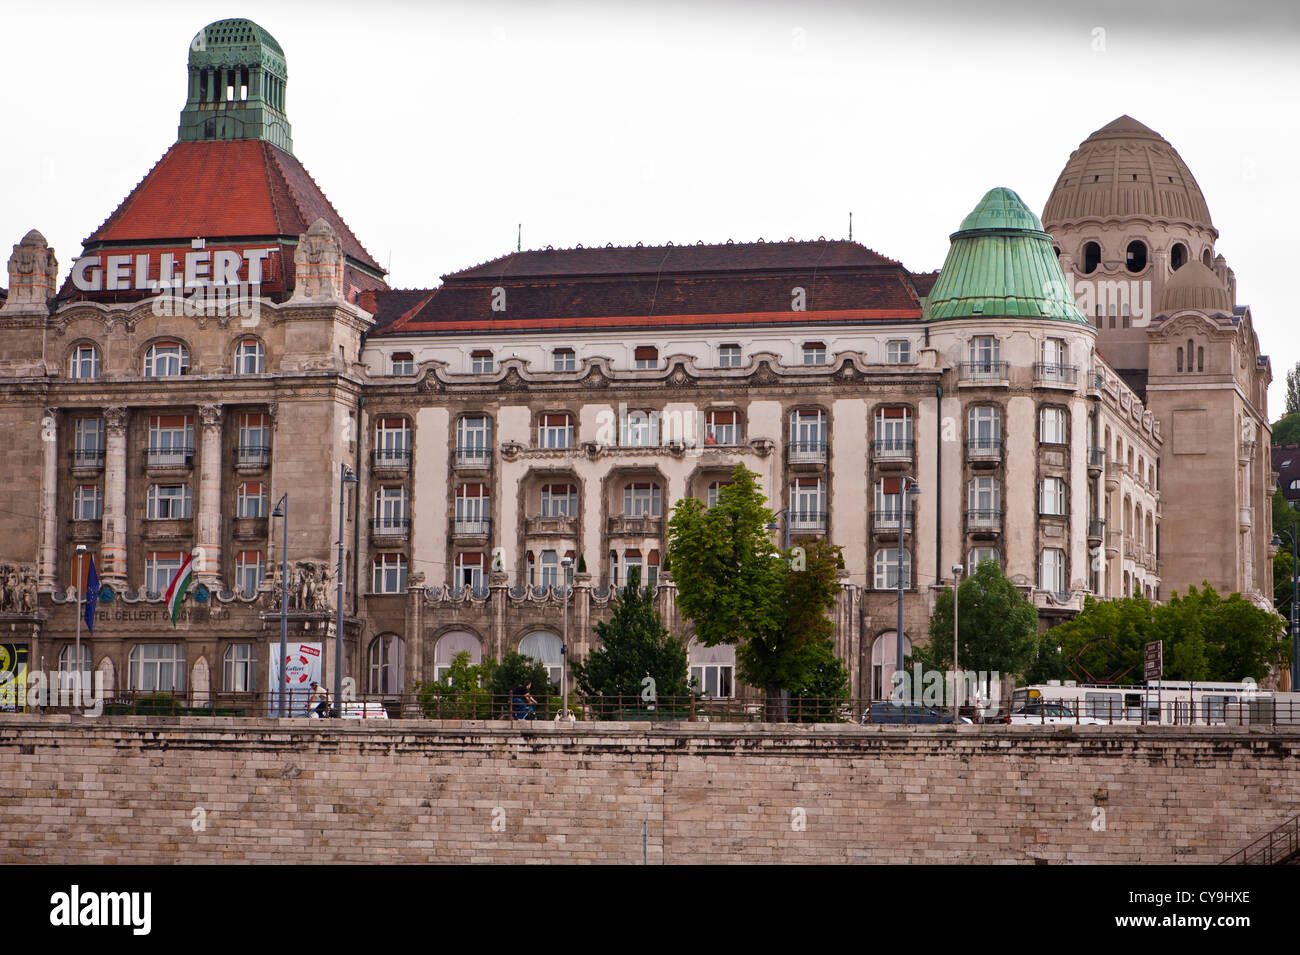 Un vecchio hotel Gellert Budapest Foto Stock